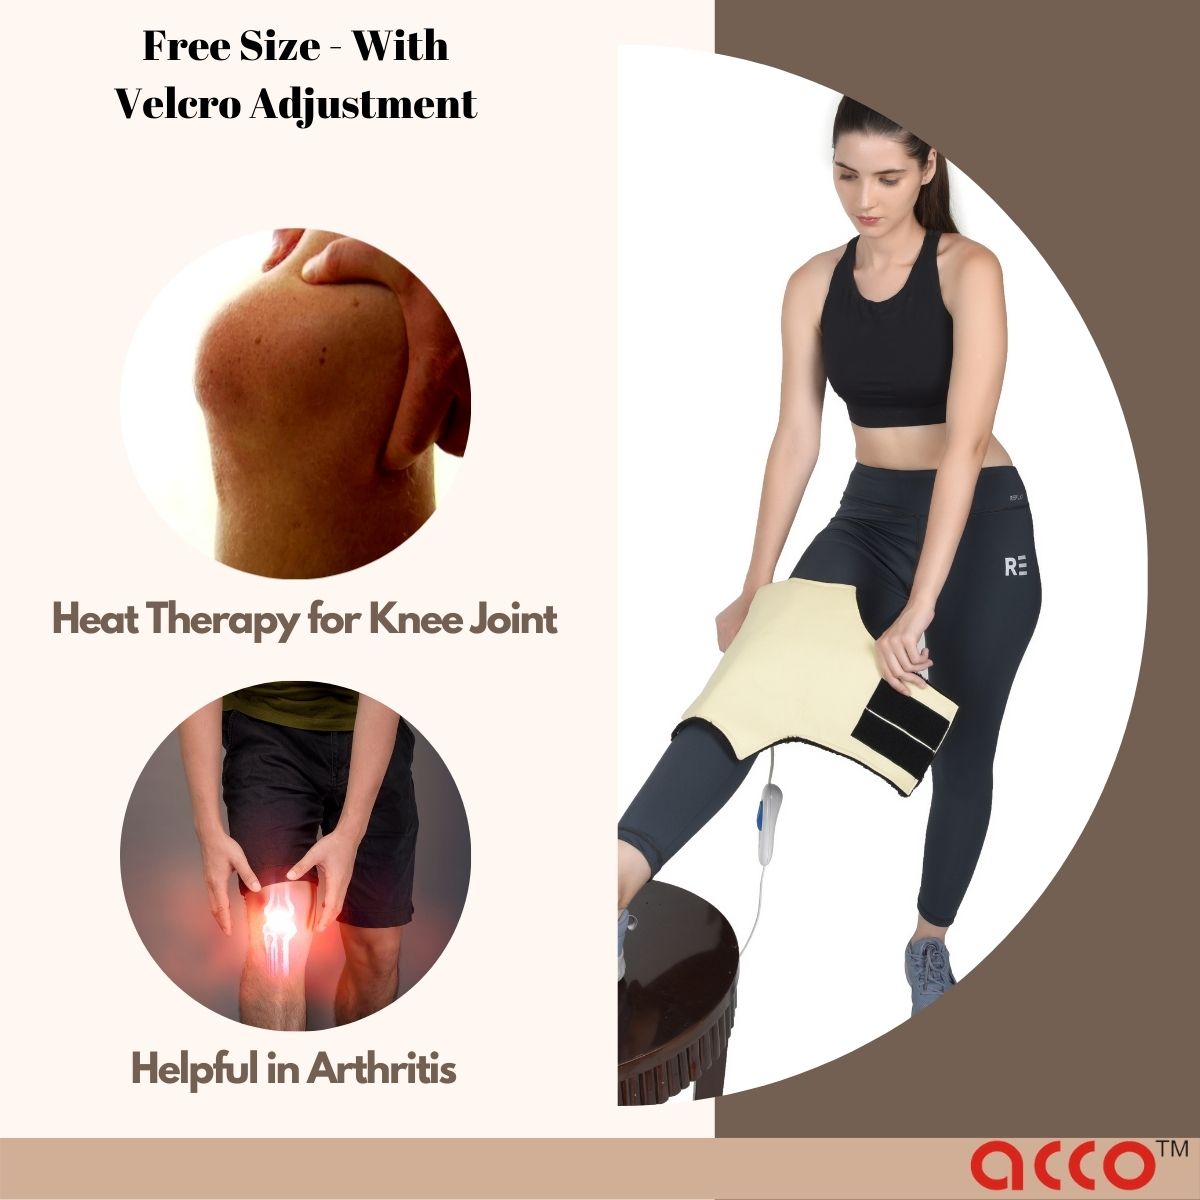 Orthopedic Electric heating Belt for Knee Pain